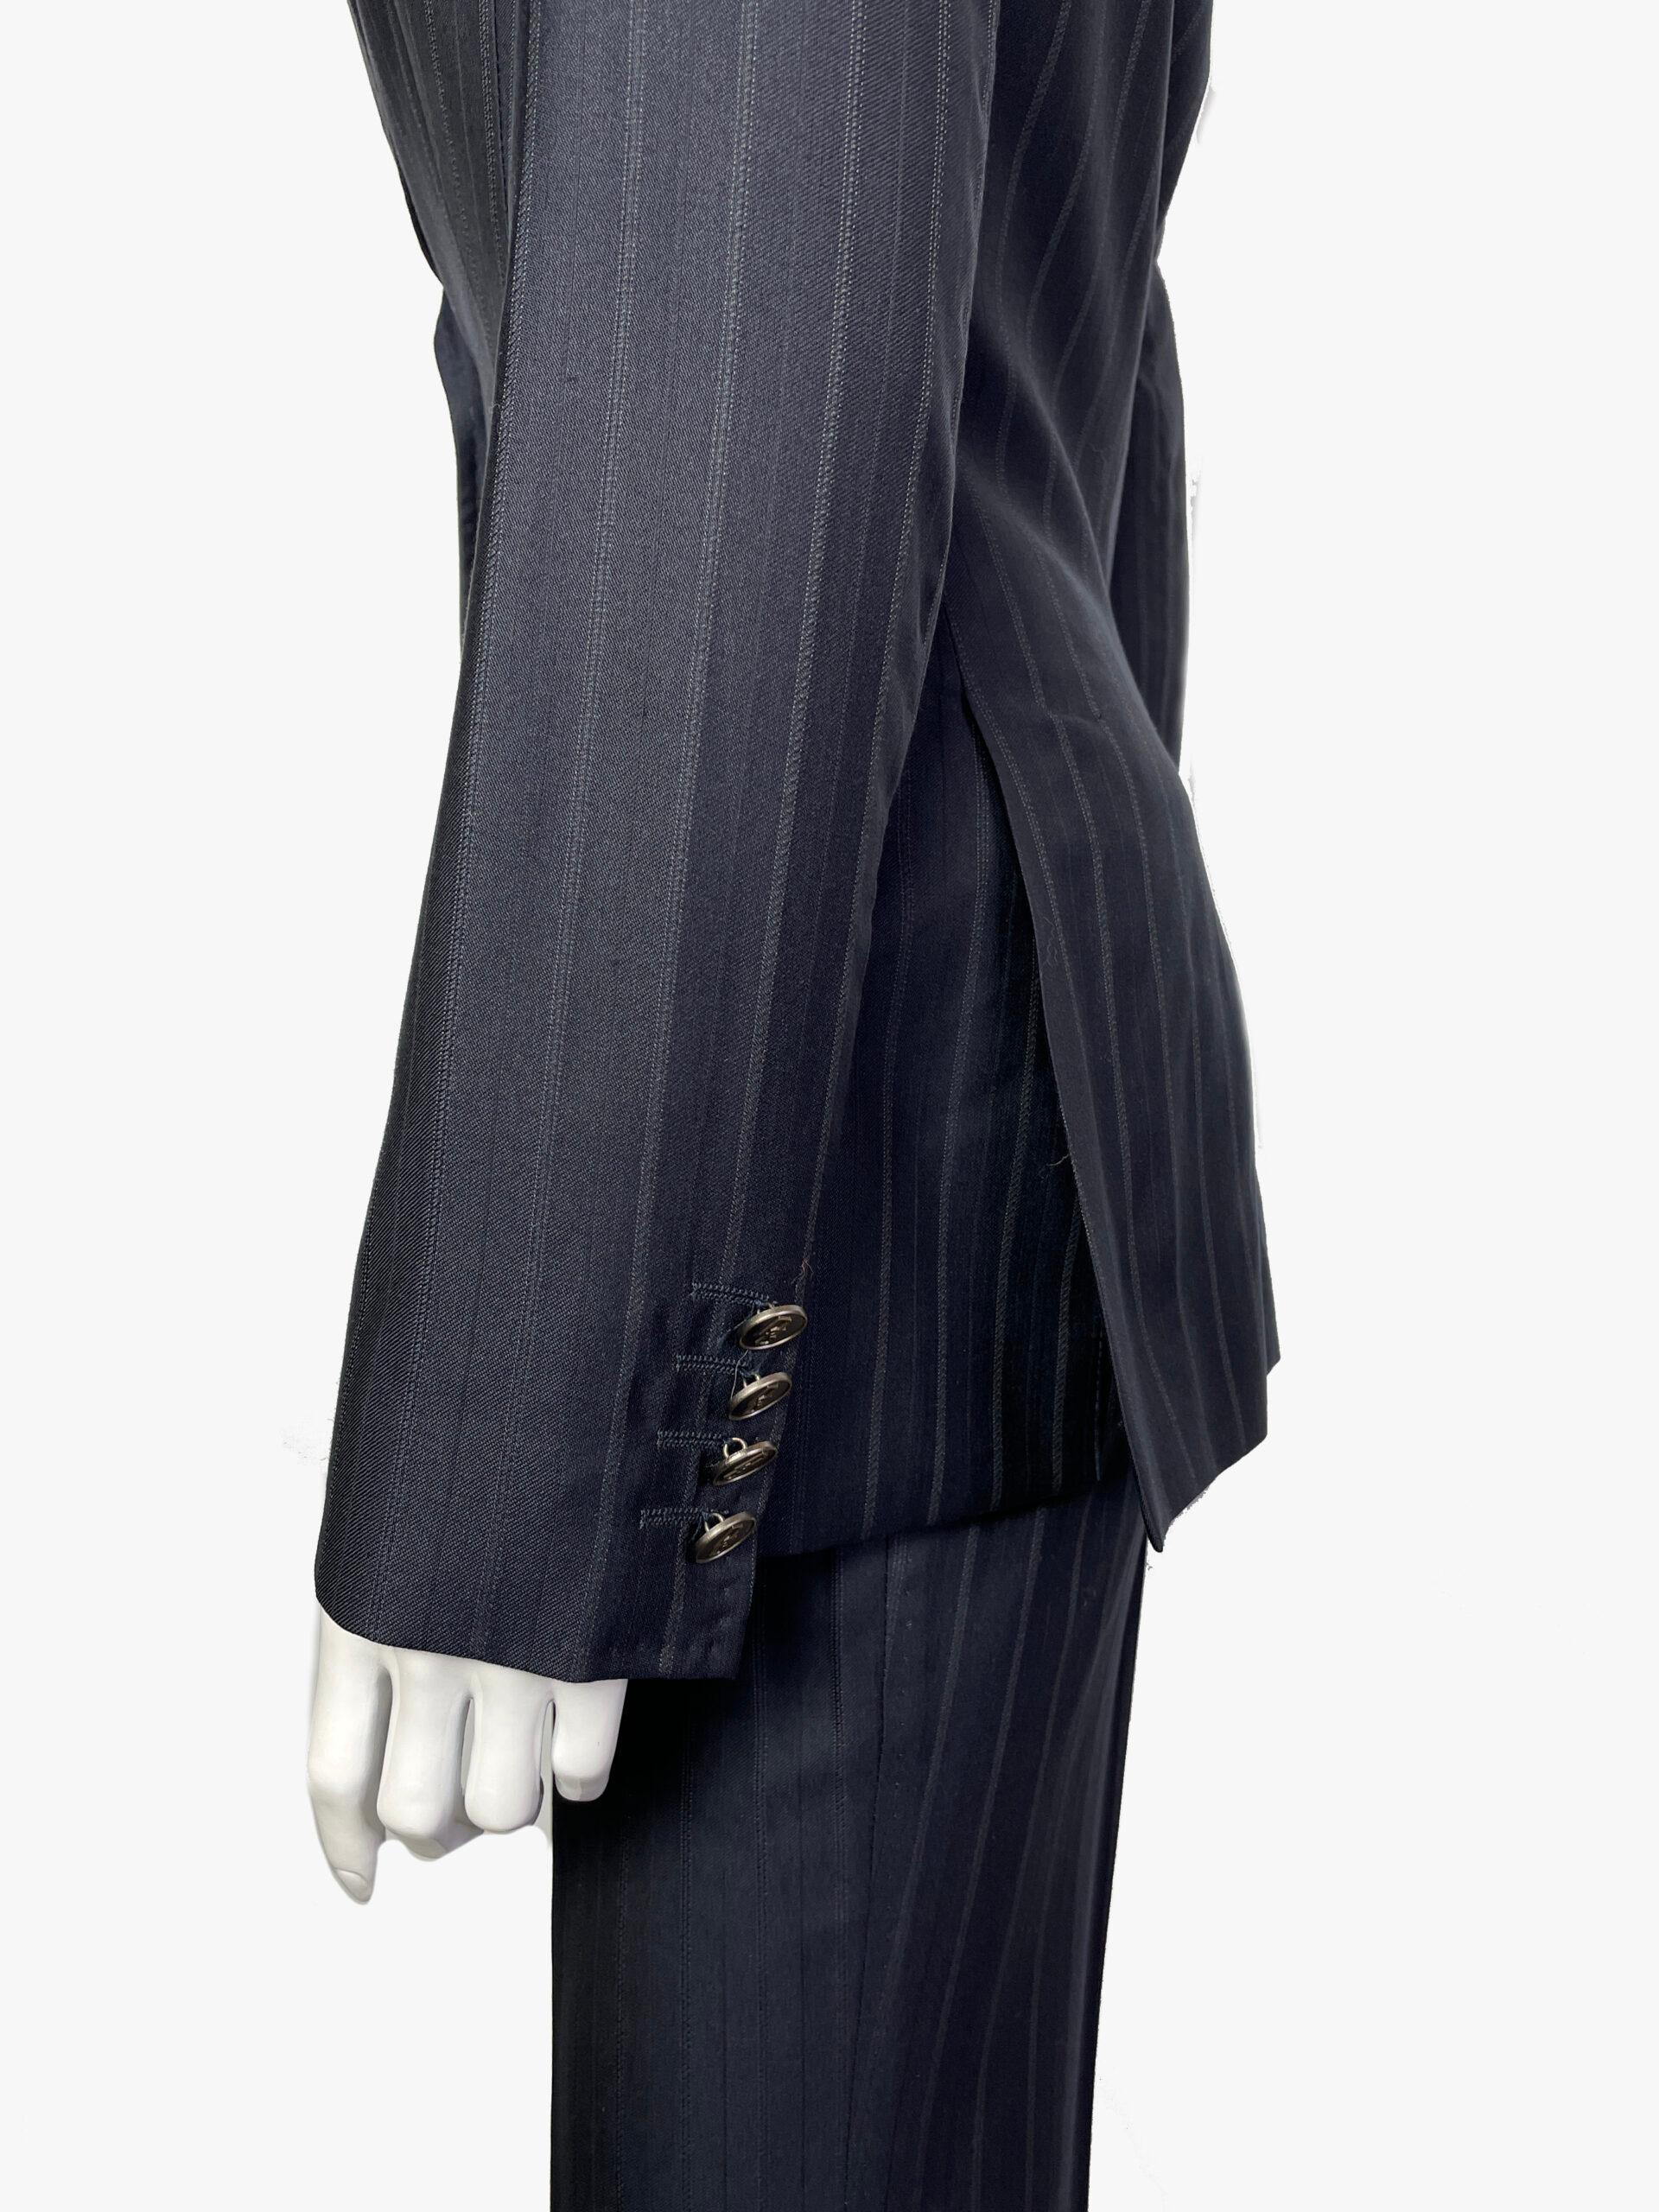 Black Dolce & Gabbana Pantsuit, 2000s For Sale